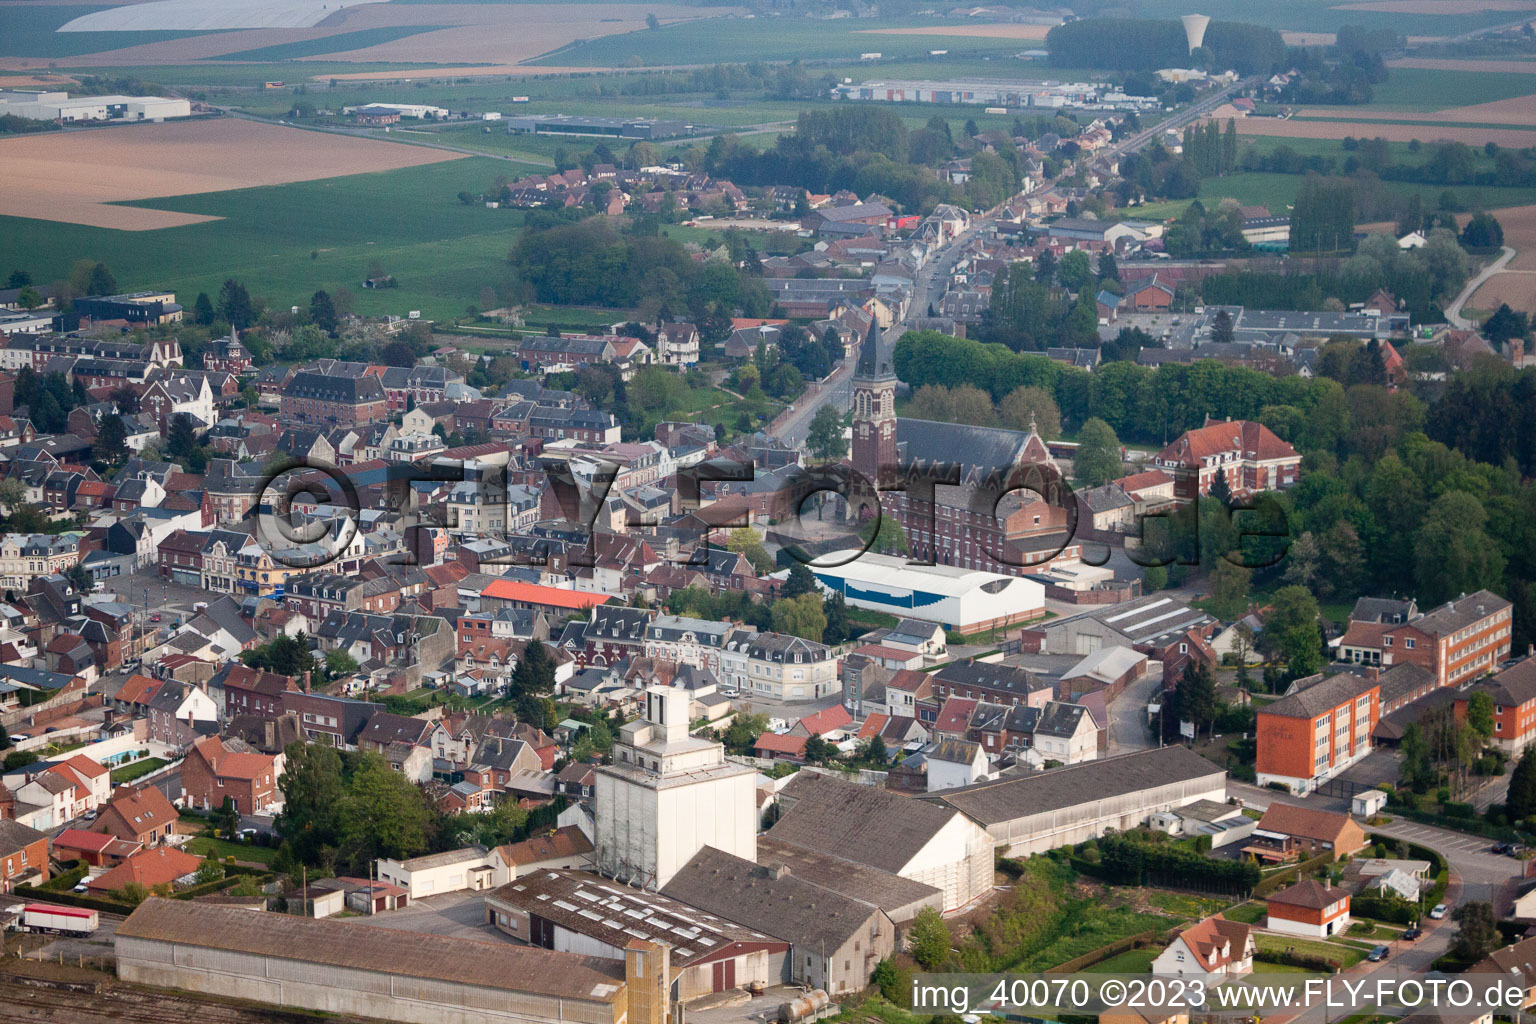 Schrägluftbild von Avesnes-lès-Bapaume im Bundesland Pas-de-Calais, Frankreich